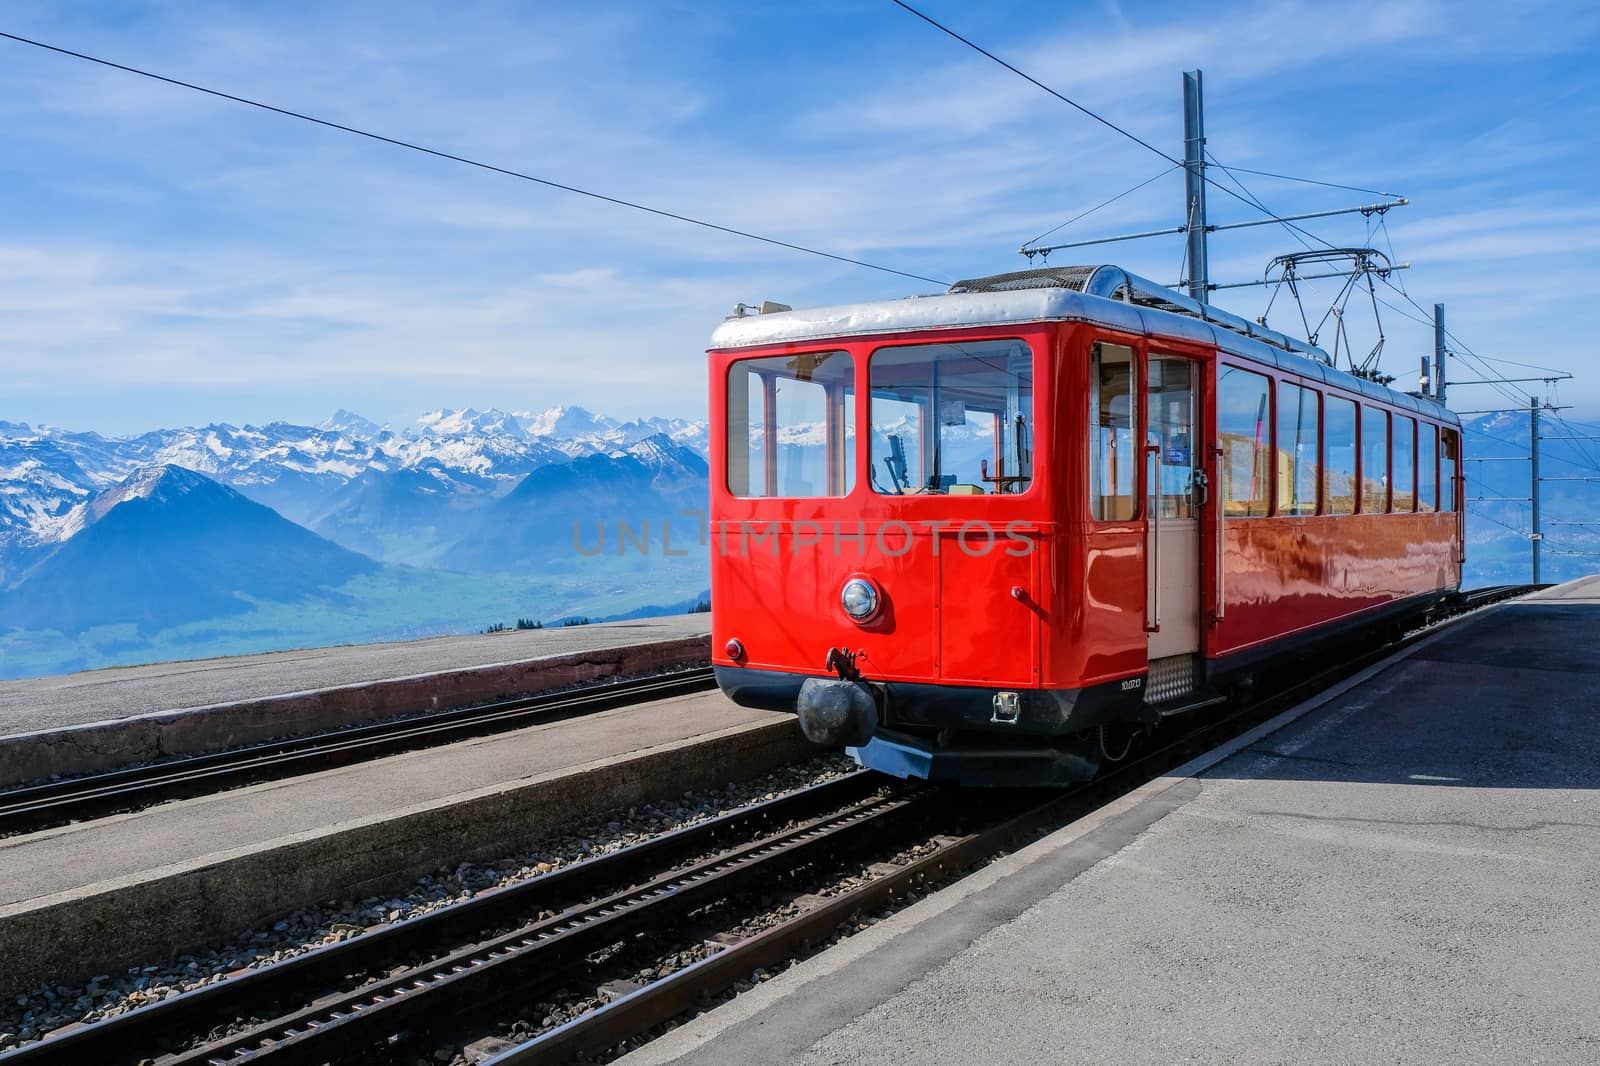 Famous electric red tourist swiss train on Rigi mountain,Switzerland,Europe